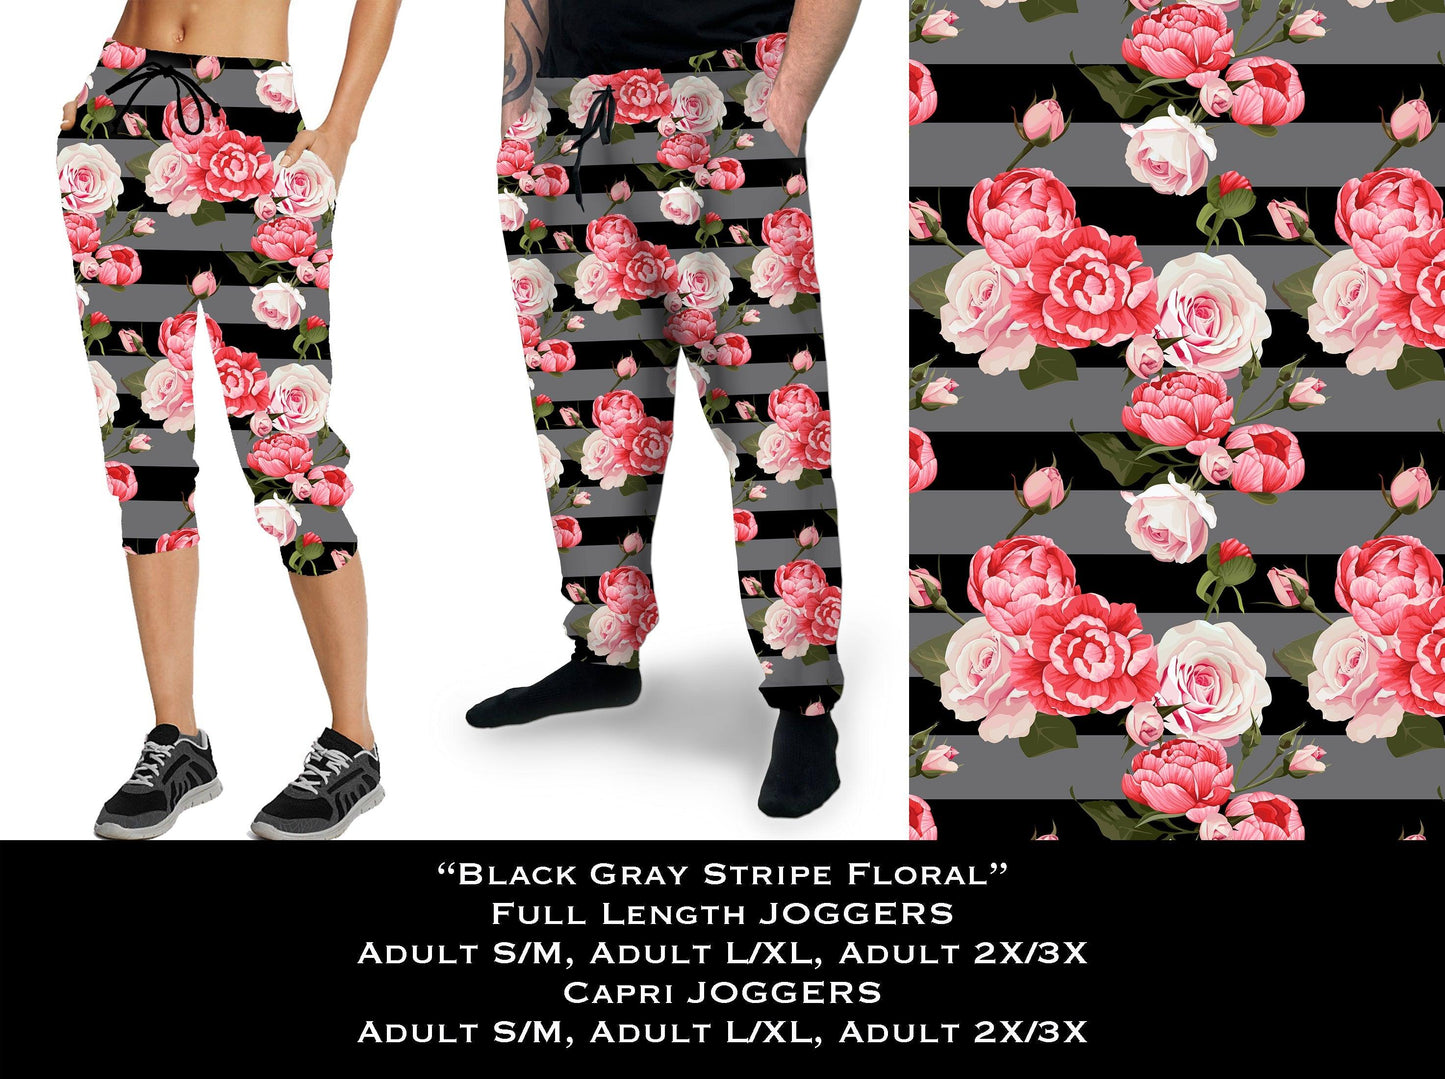 Black & Gray Stripe Floral - Full & Capri Joggers